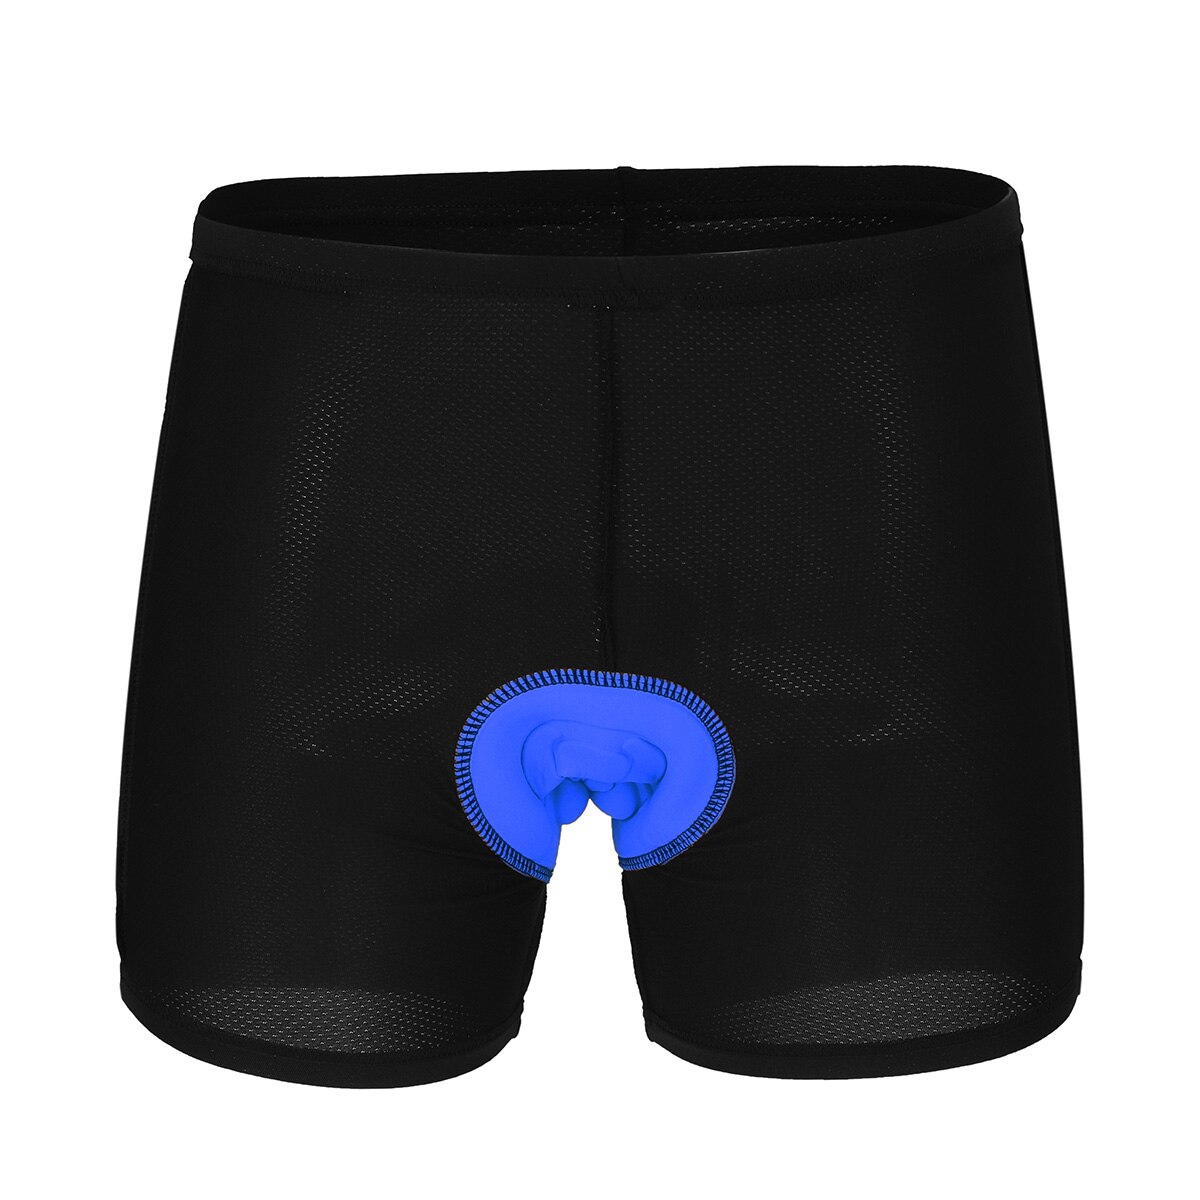 Mænd komfortable cykel cykelbukser undertøj silikone gel 3d polstret undertøj cykel cykel korte bukser udendørs sportsbeklædning: Blå / Xl